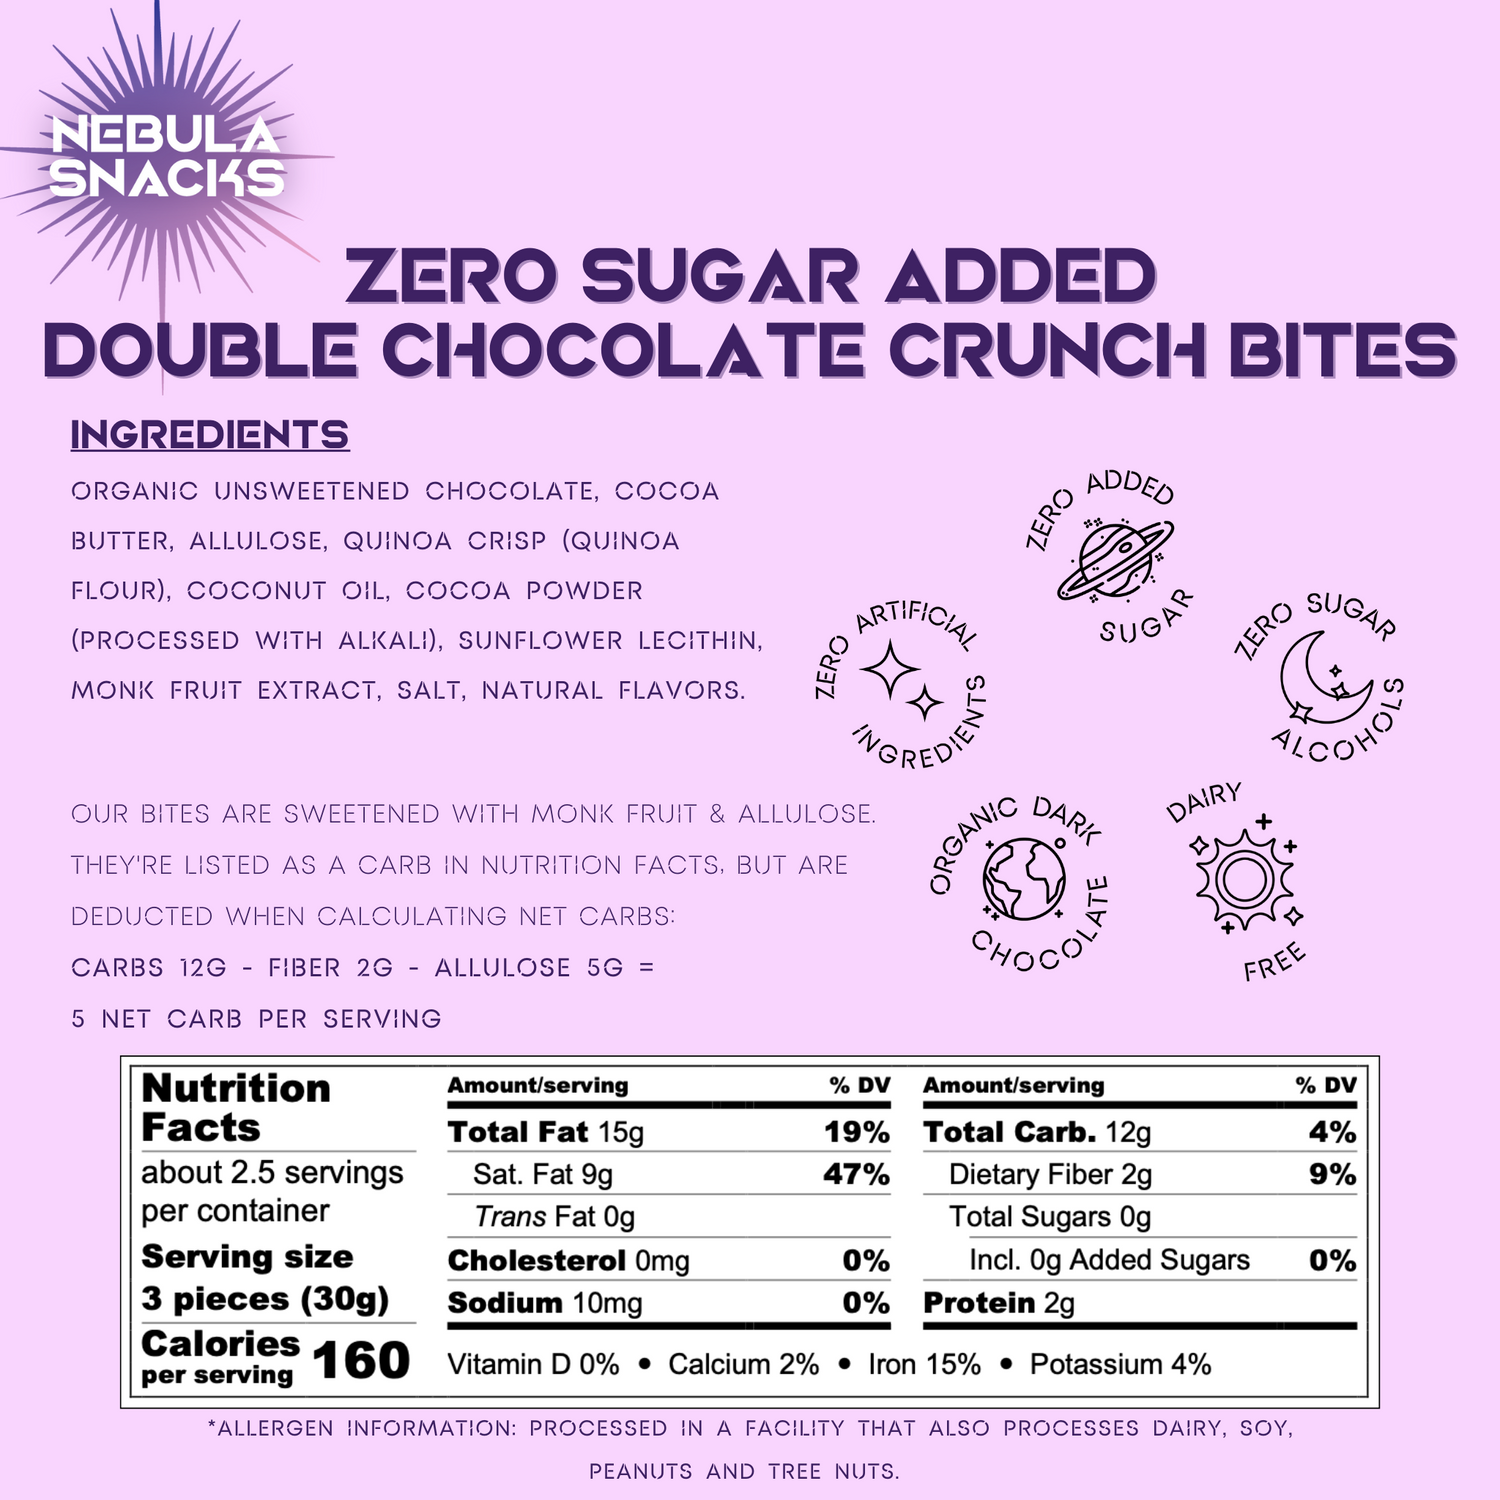 Nebula Snacks - Zero Sugar Added Double Chocolate Crunch Chocolate Bites - Ingredients &amp; Nutrition Facts